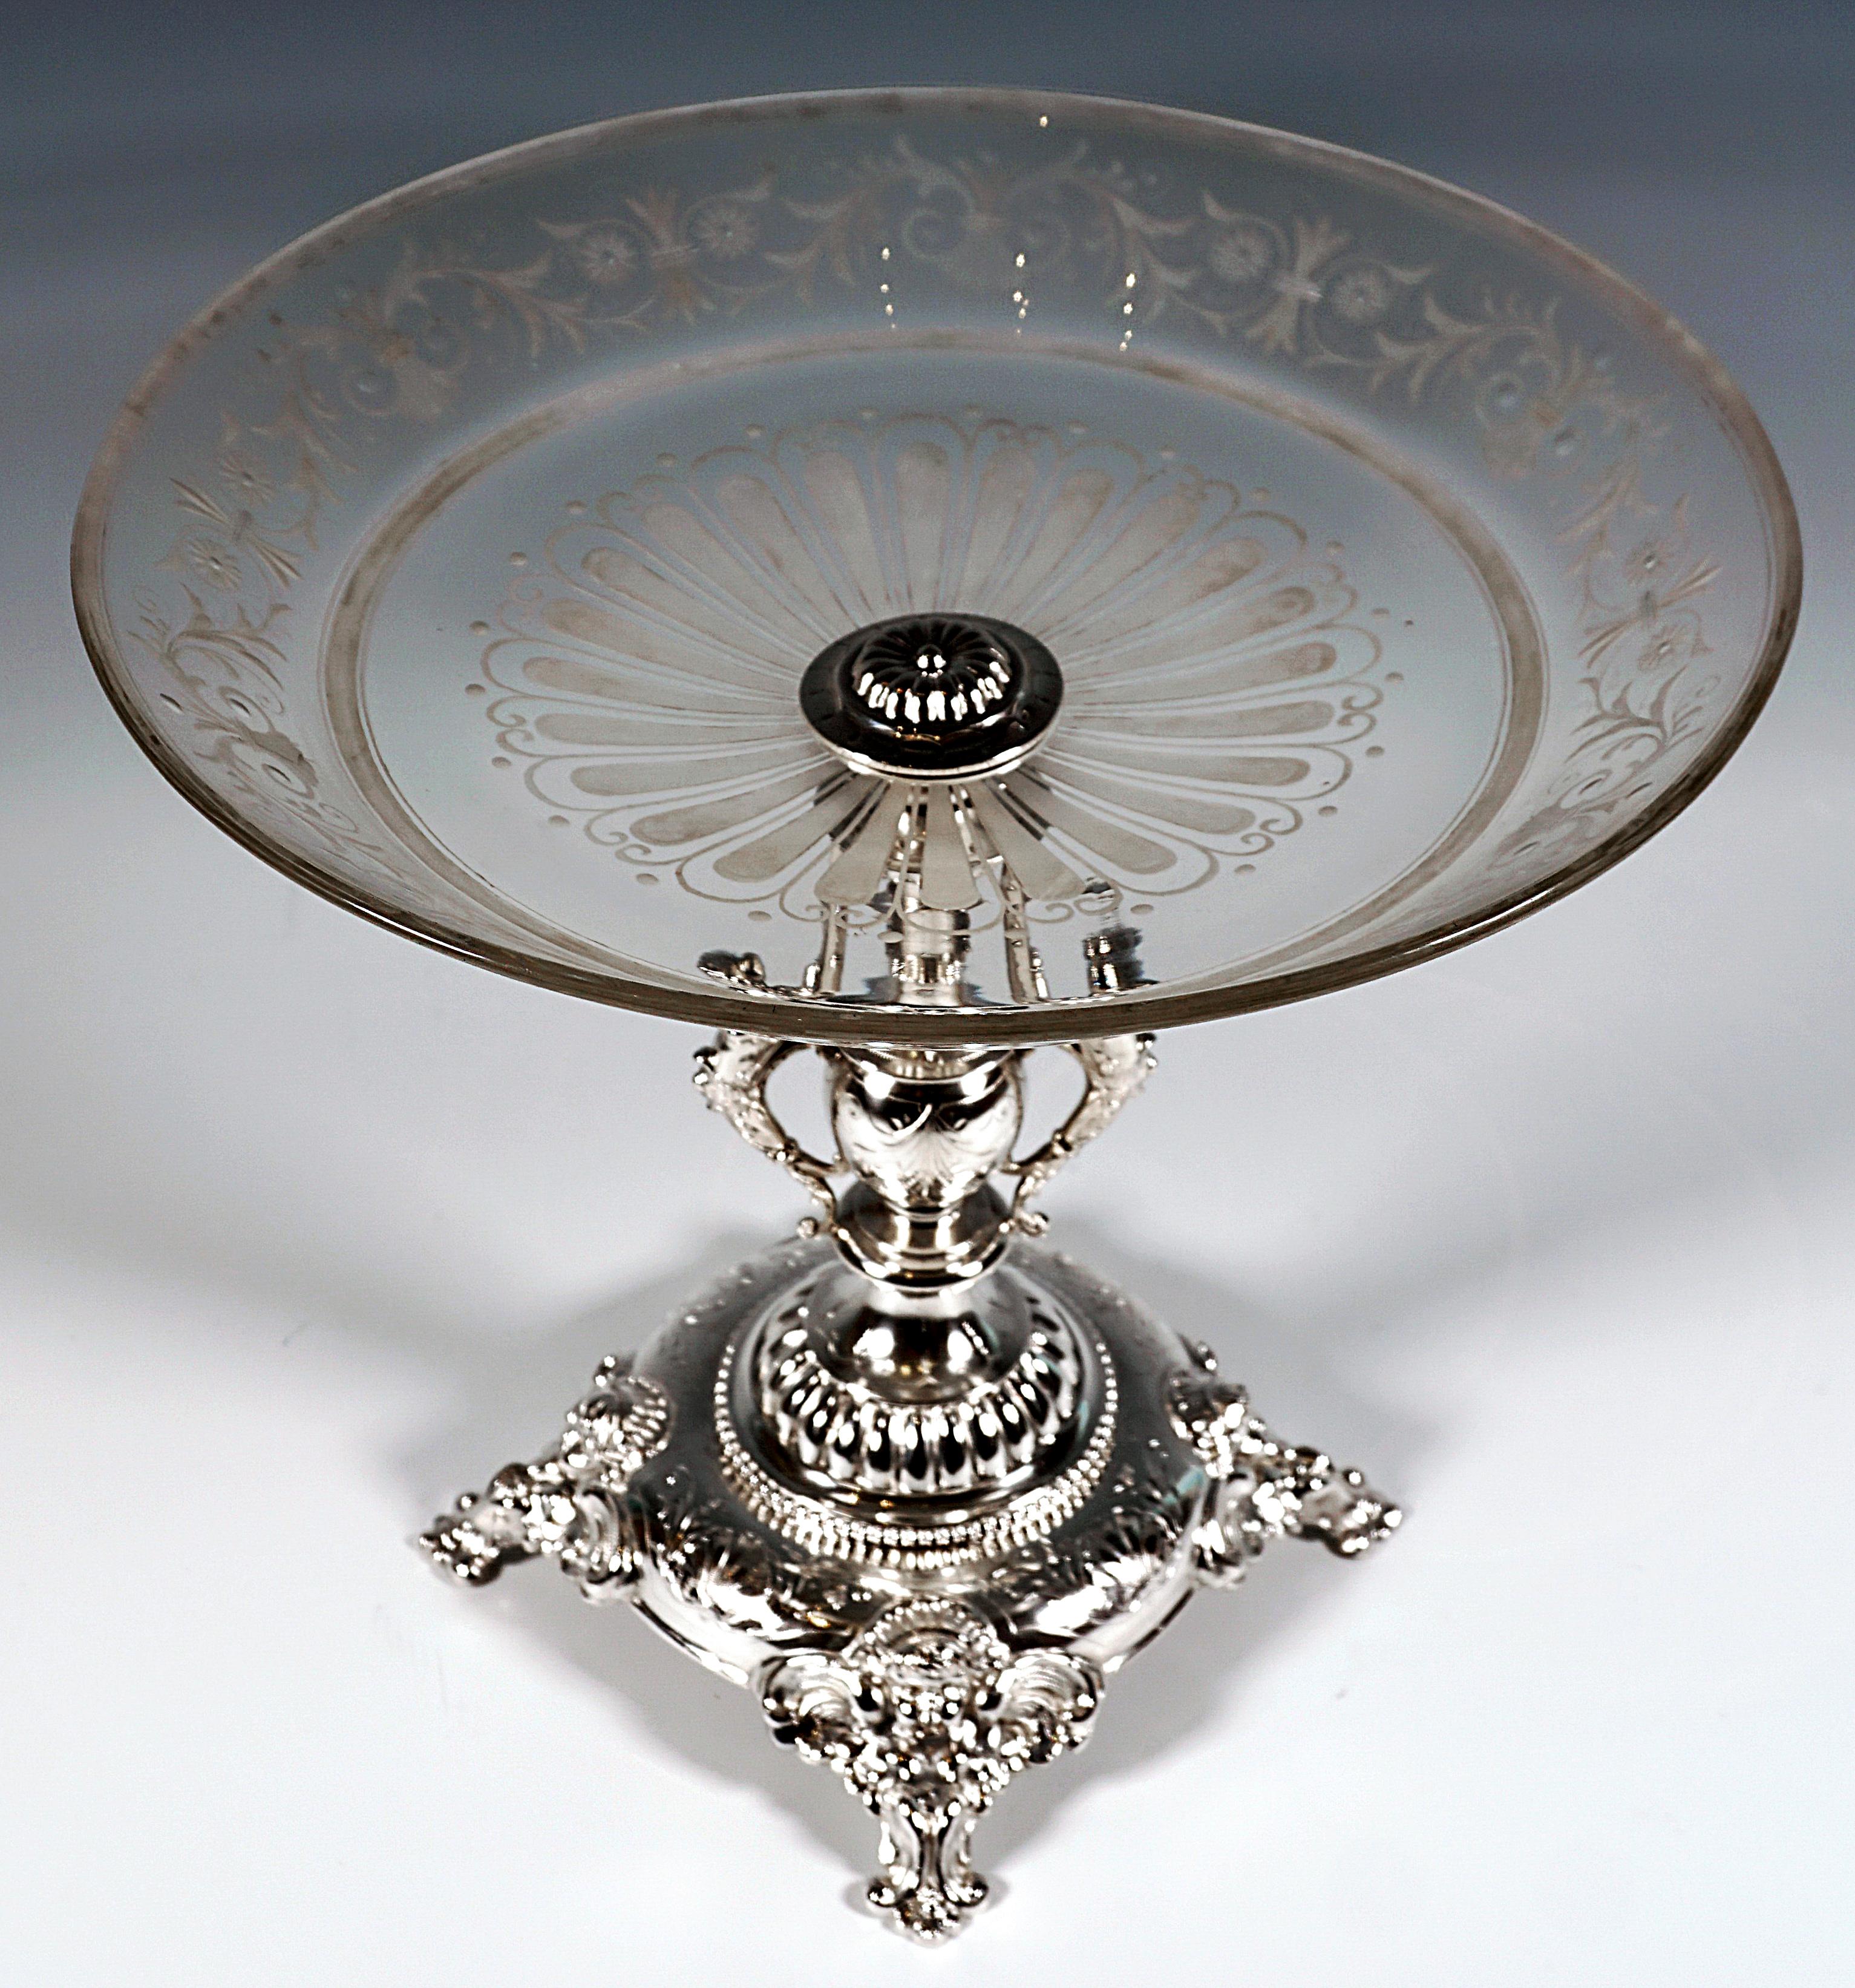 Austrian Viennese Art Nouveau Silver Centerpiece With Original Glass Bowl, Around 1900 For Sale